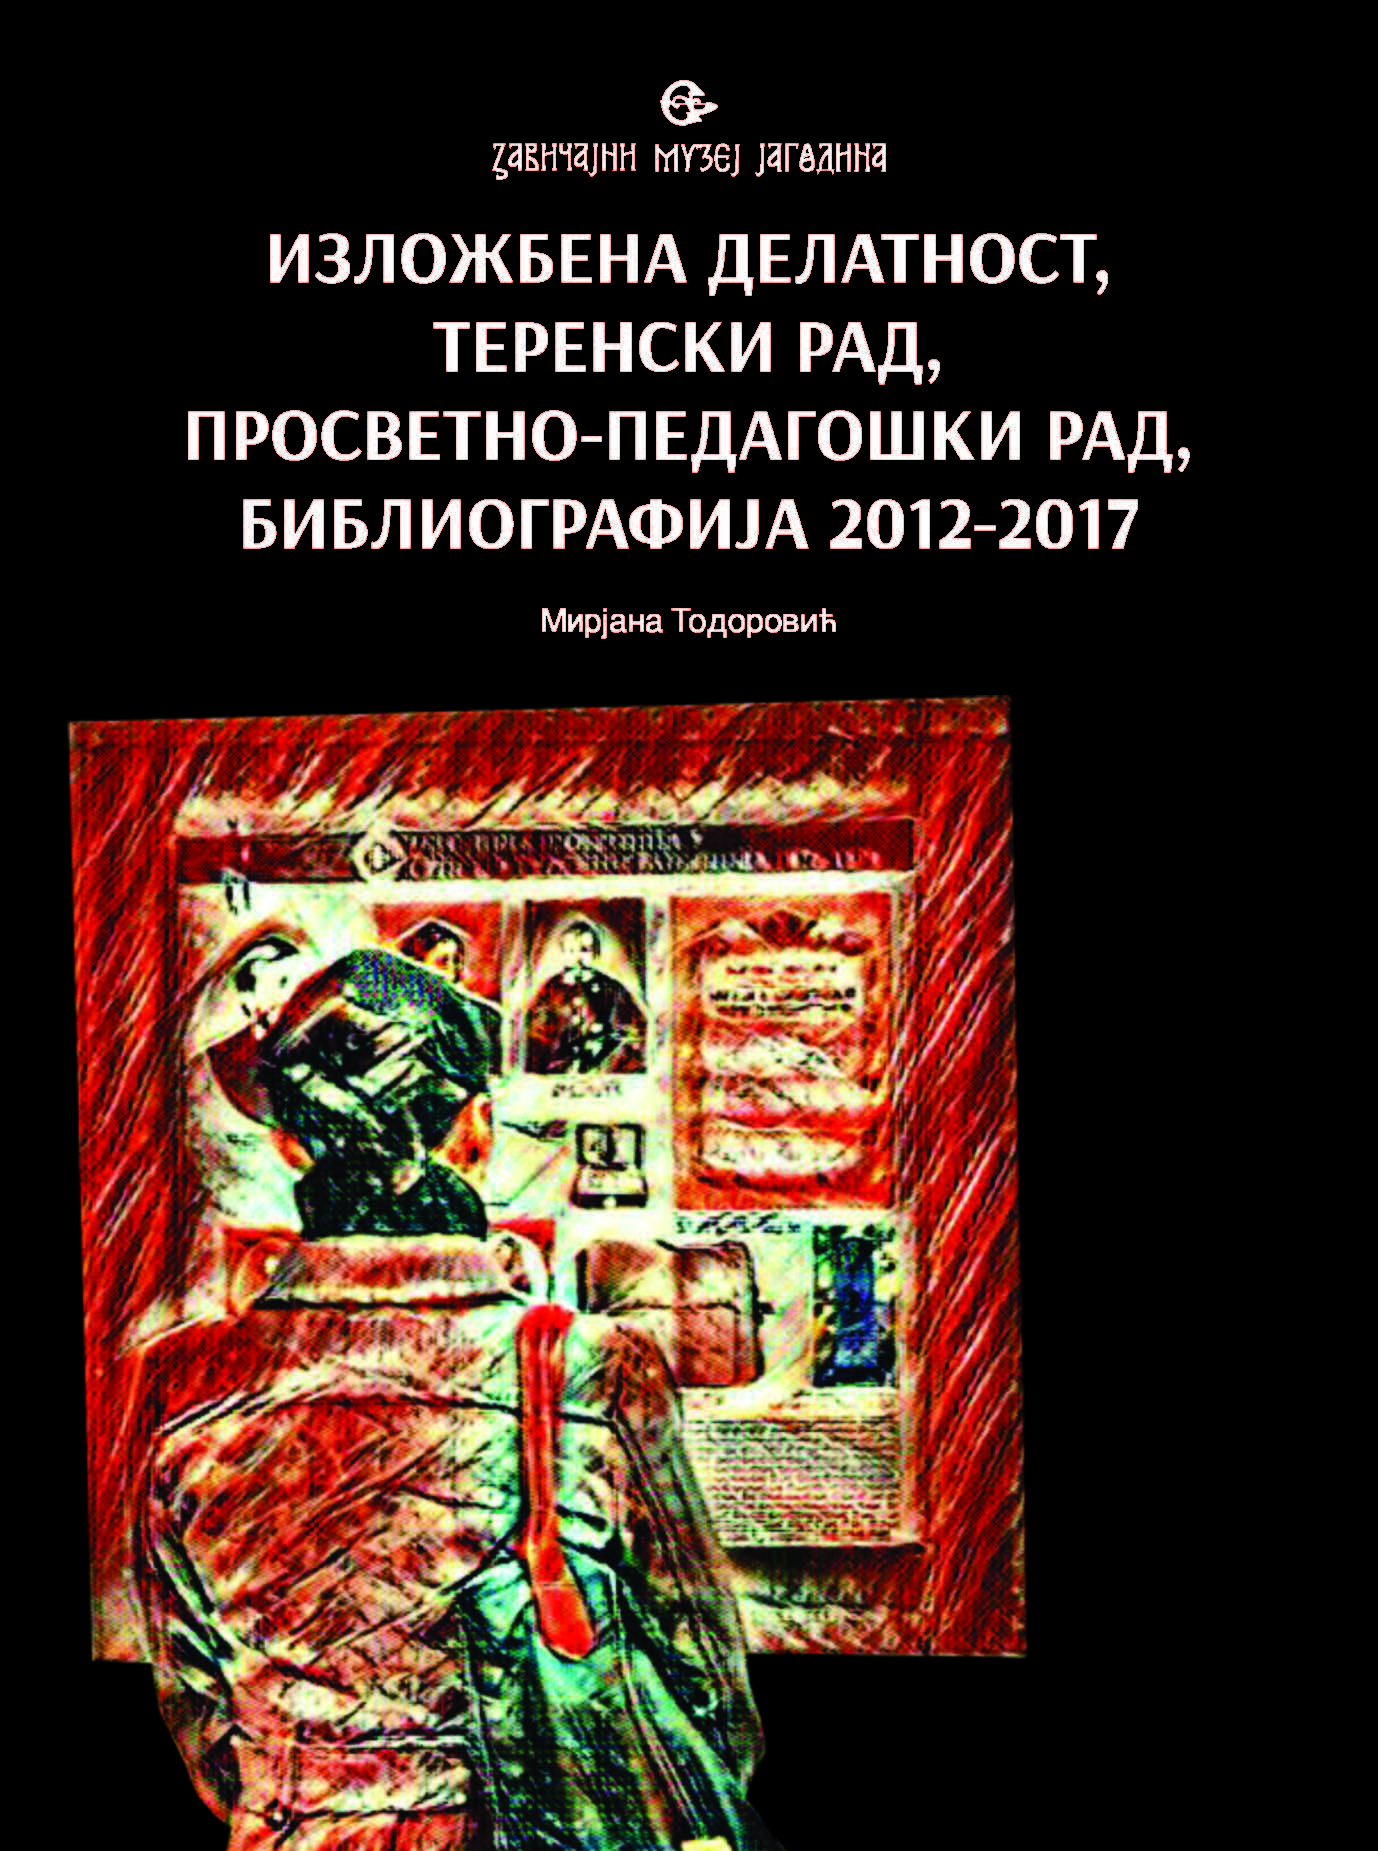 Изложбена делатност, теренски рад, просветно-педагошки рад, библиографија 2012-2017